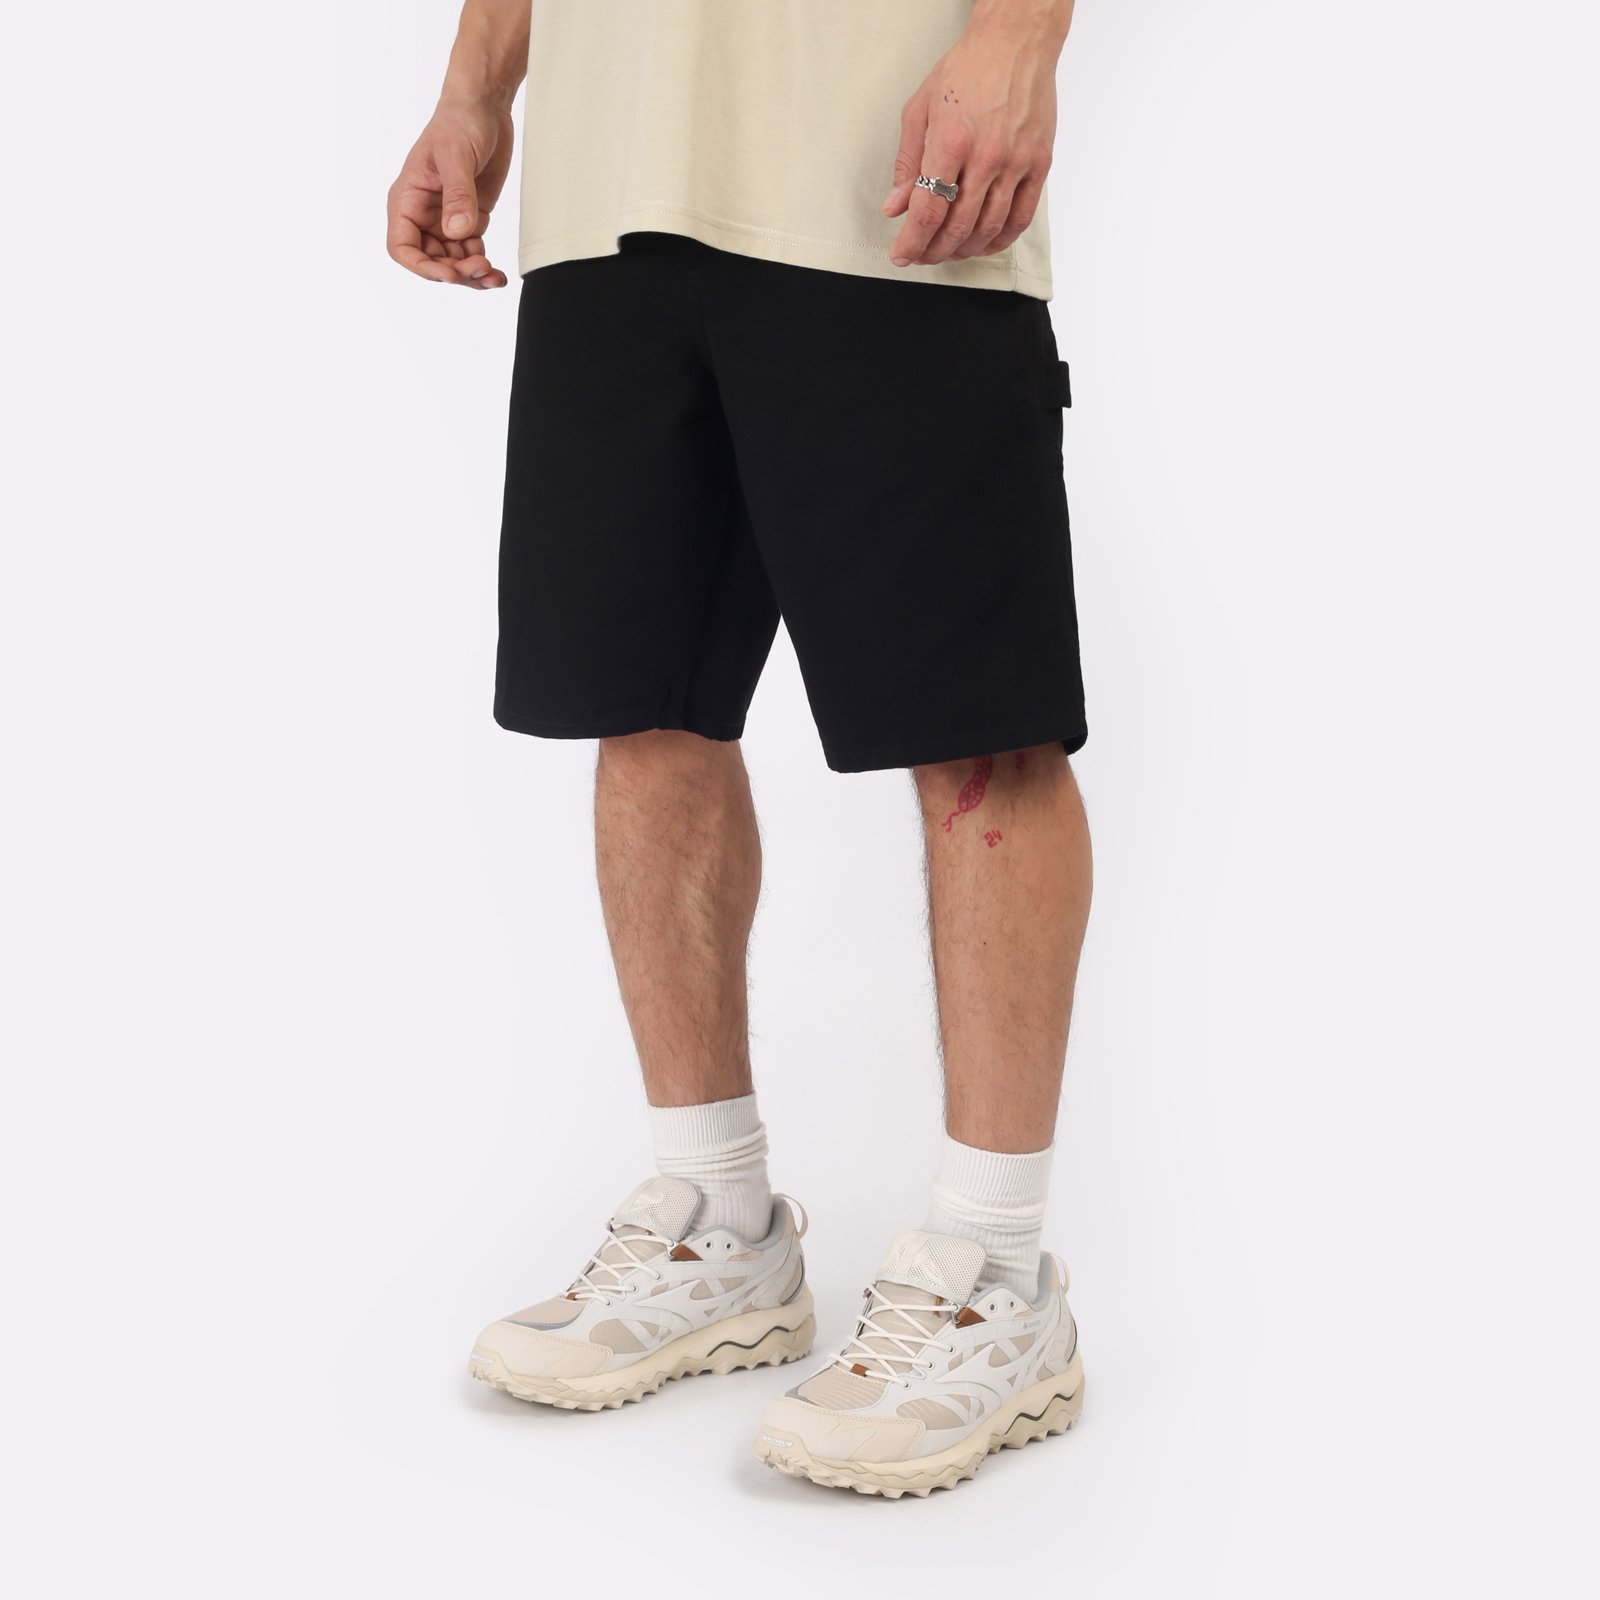 Мужские шорты Carhartt WIP Single Knee Short (I027942-black)  - цена, описание, фото 3